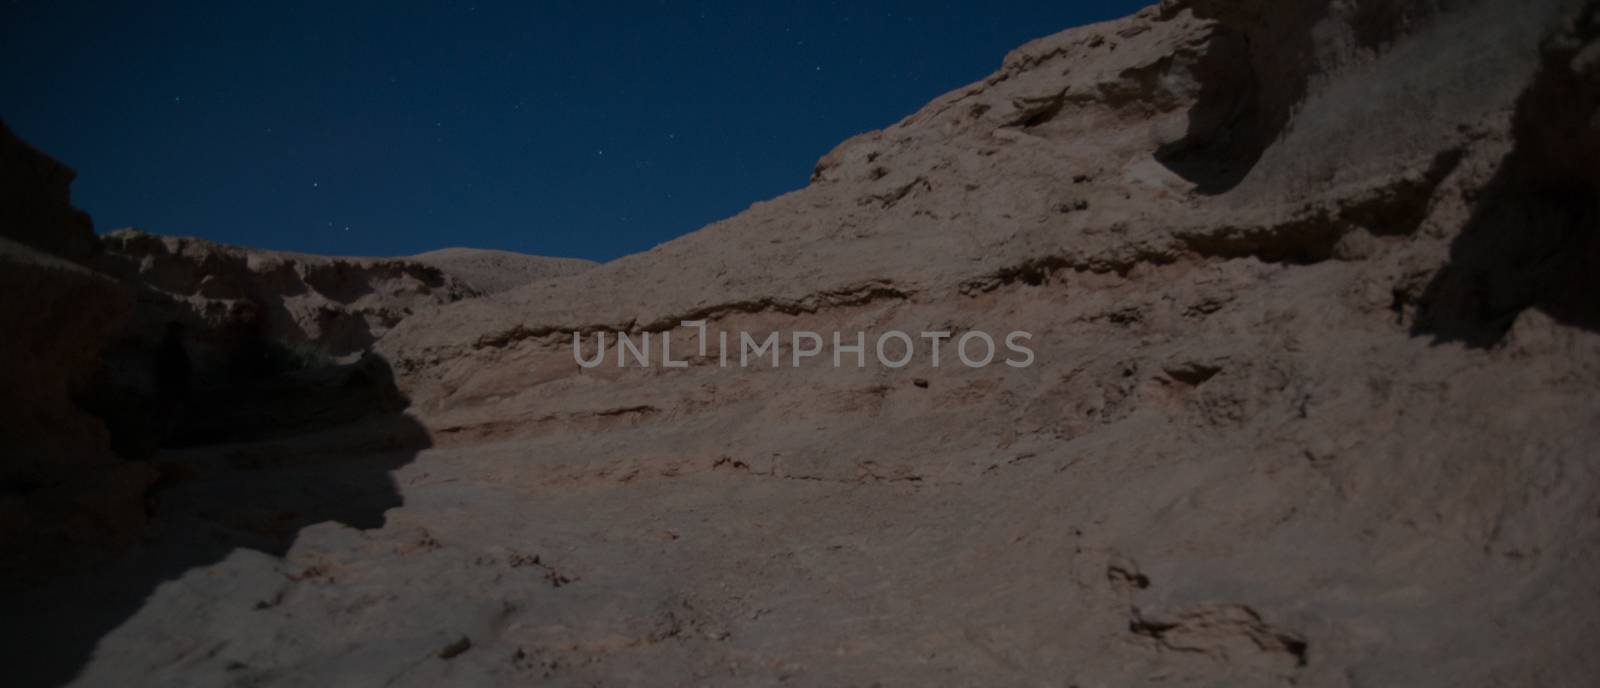 Adventure in dart Negev desert in Israel night